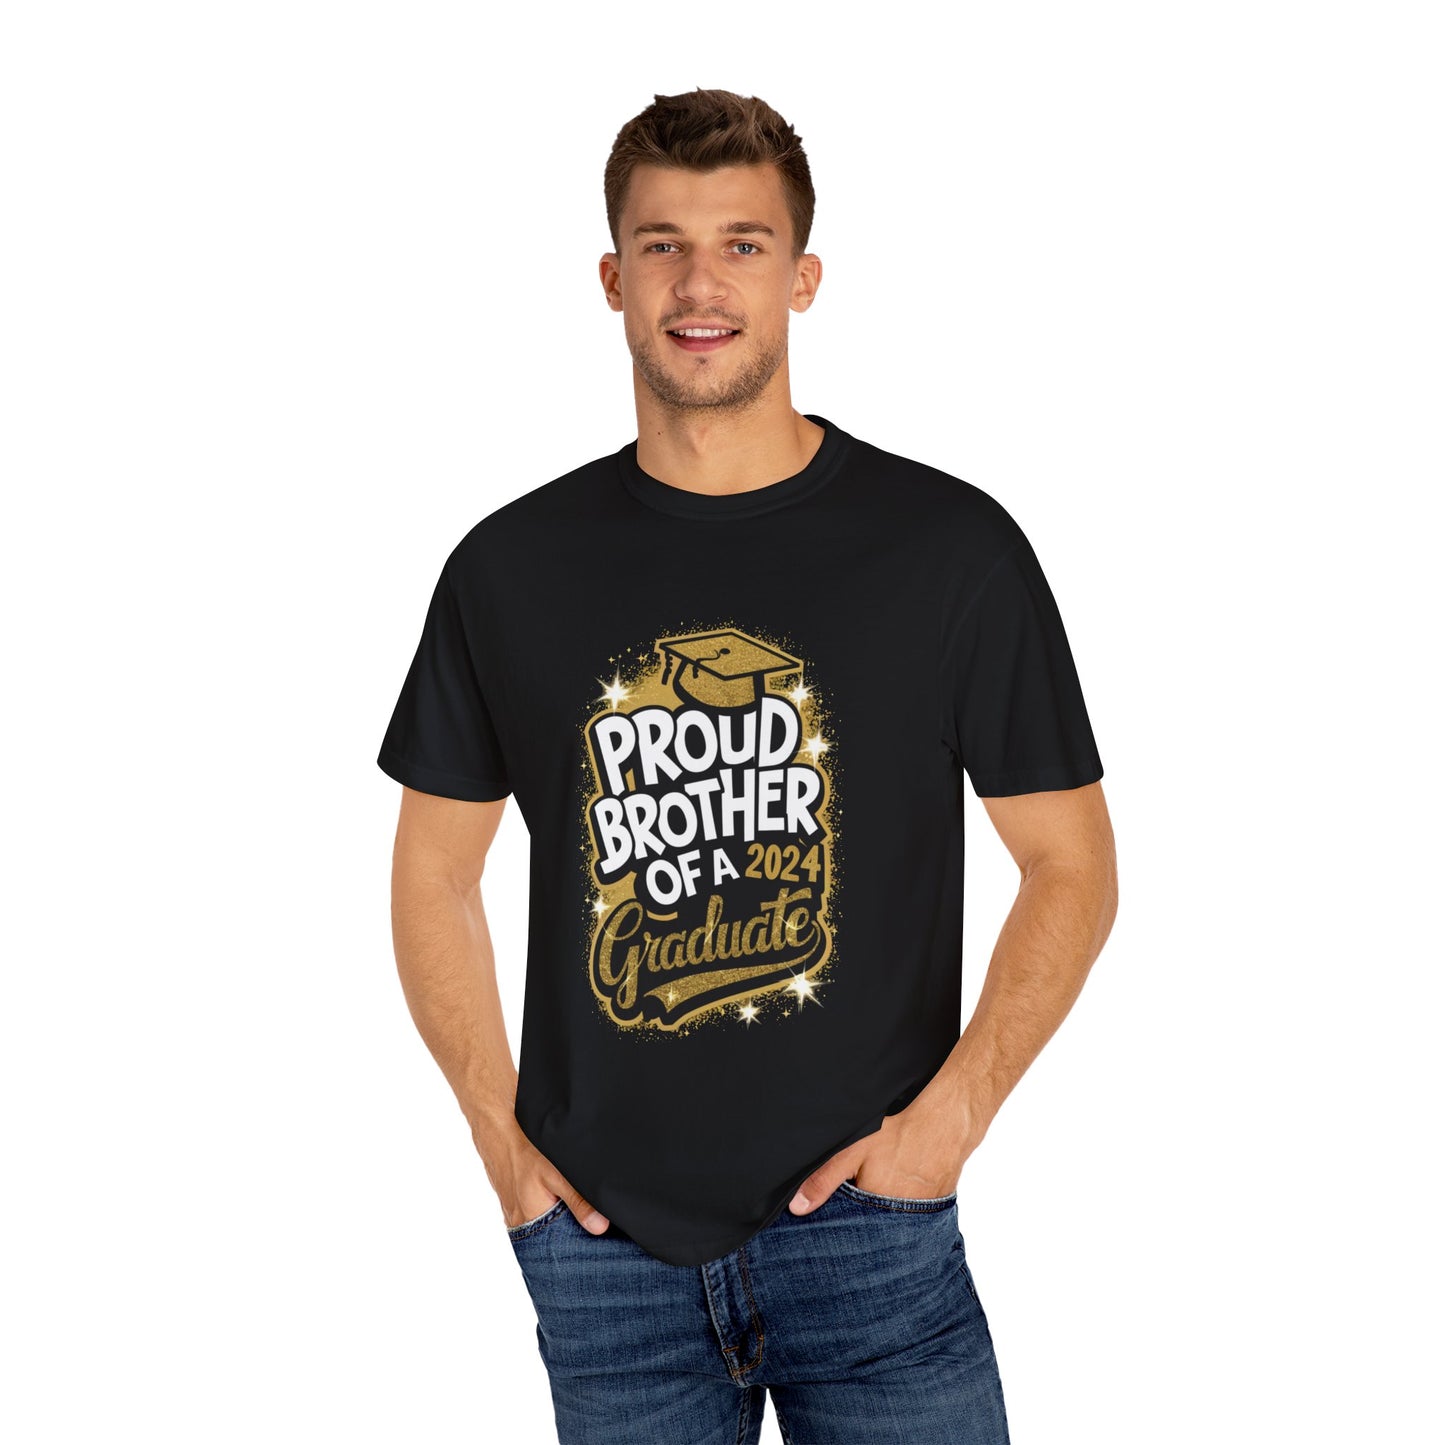 Proud Brother of a 2024 Graduate Unisex Garment-dyed T-shirt Cotton Funny Humorous Graphic Soft Premium Unisex Men Women Black T-shirt Birthday Gift-18